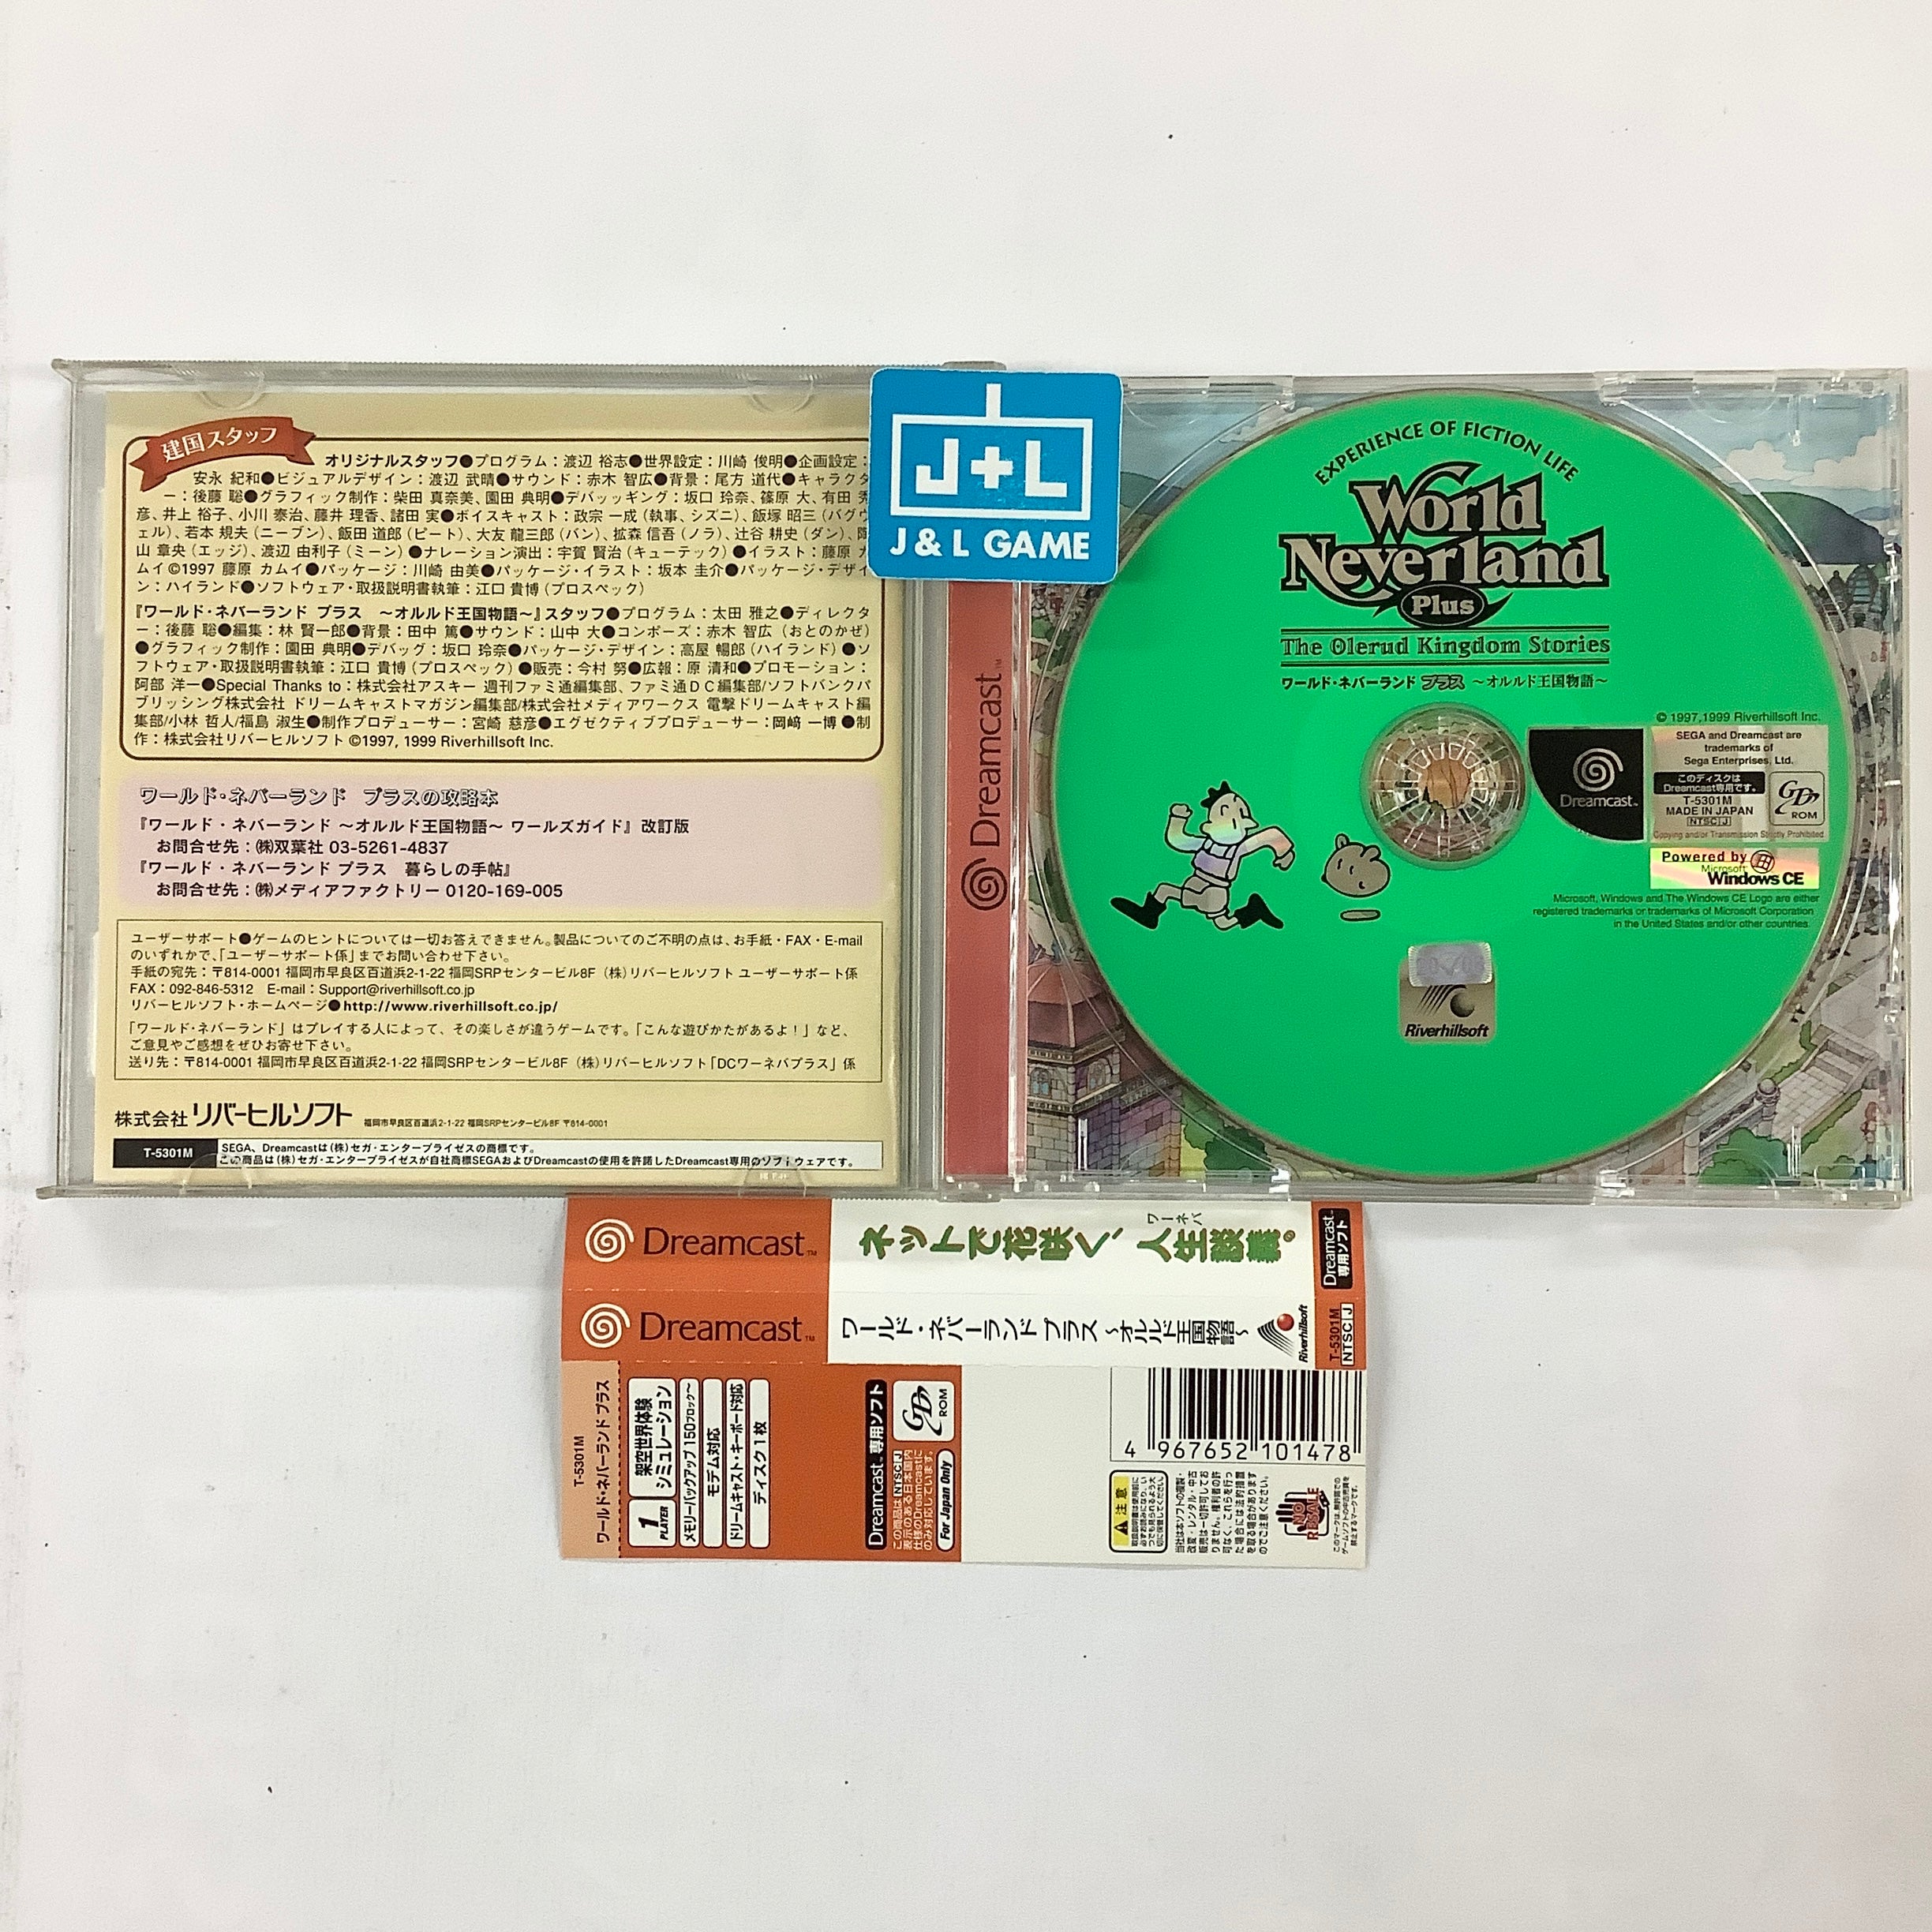 World Neverland Plus: Orurudo Oukoku Monogatari - (DC) SEGA Dreamcast [Pre-Owned] (Japanese Import) Video Games Riverhillsoft   